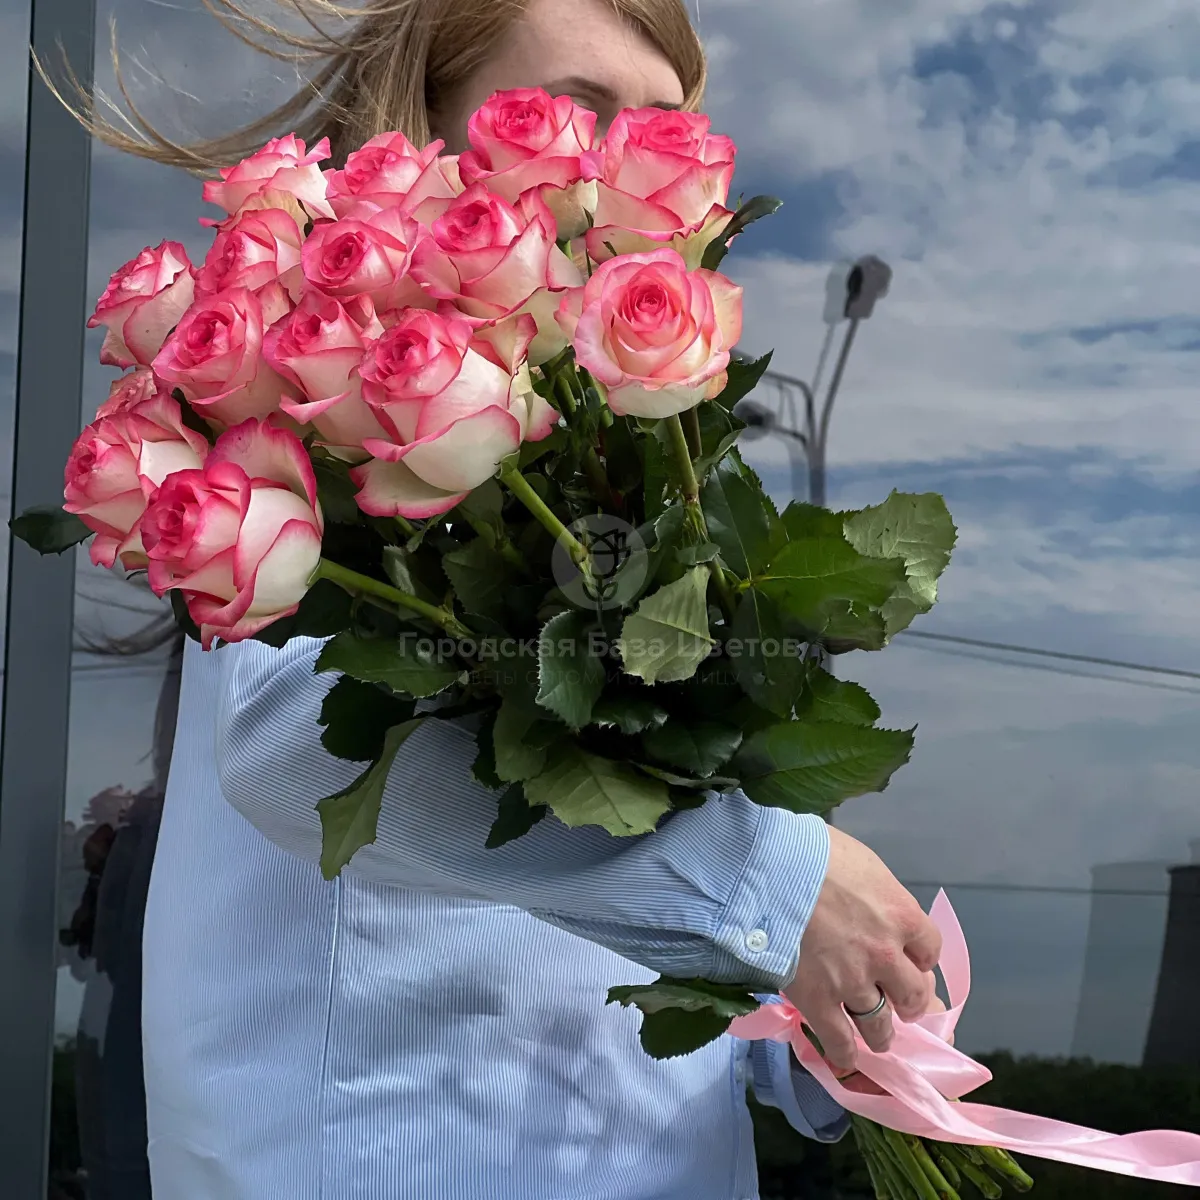 15 бело-розовых роз (70 см)